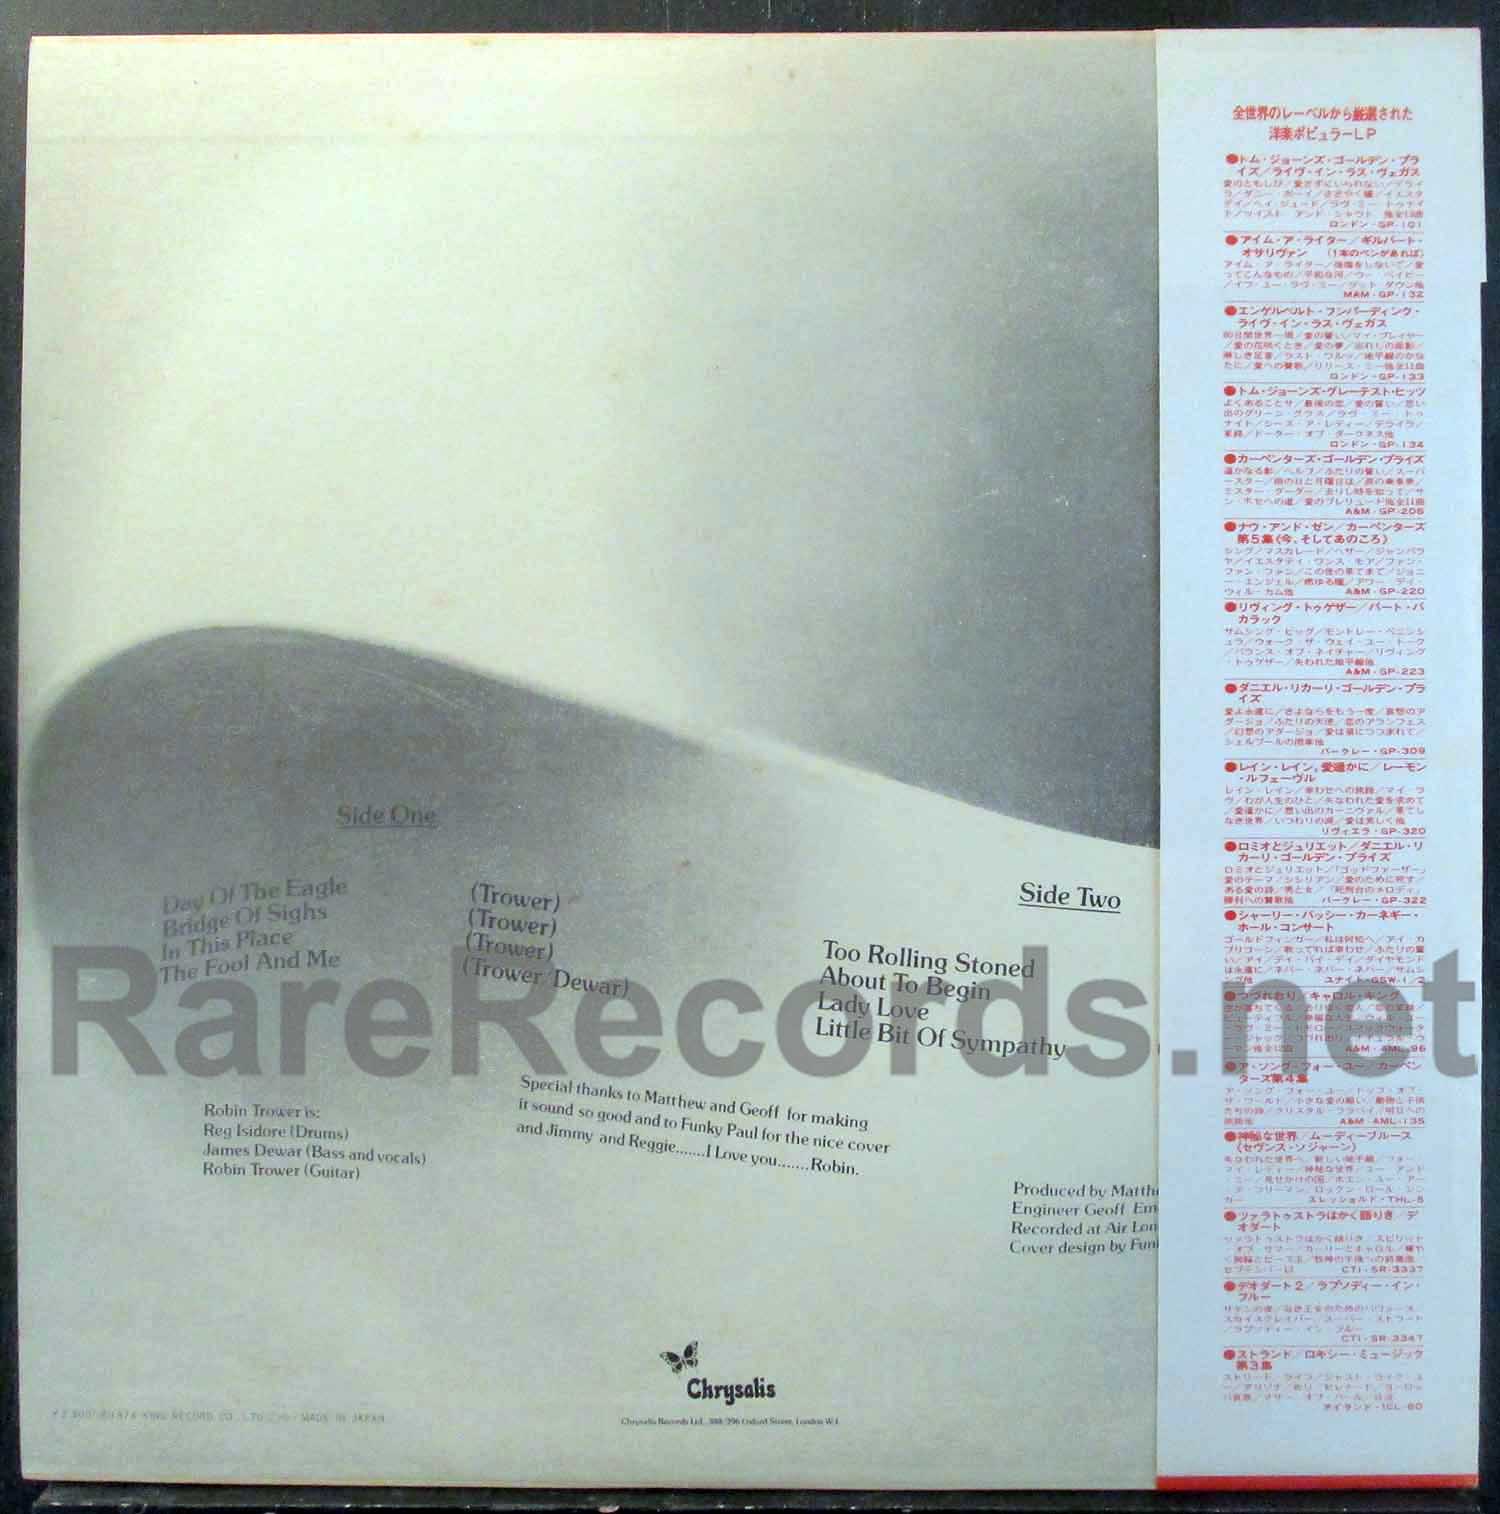 Robin Trower - Bridge of Sighs original Japan LP with obi